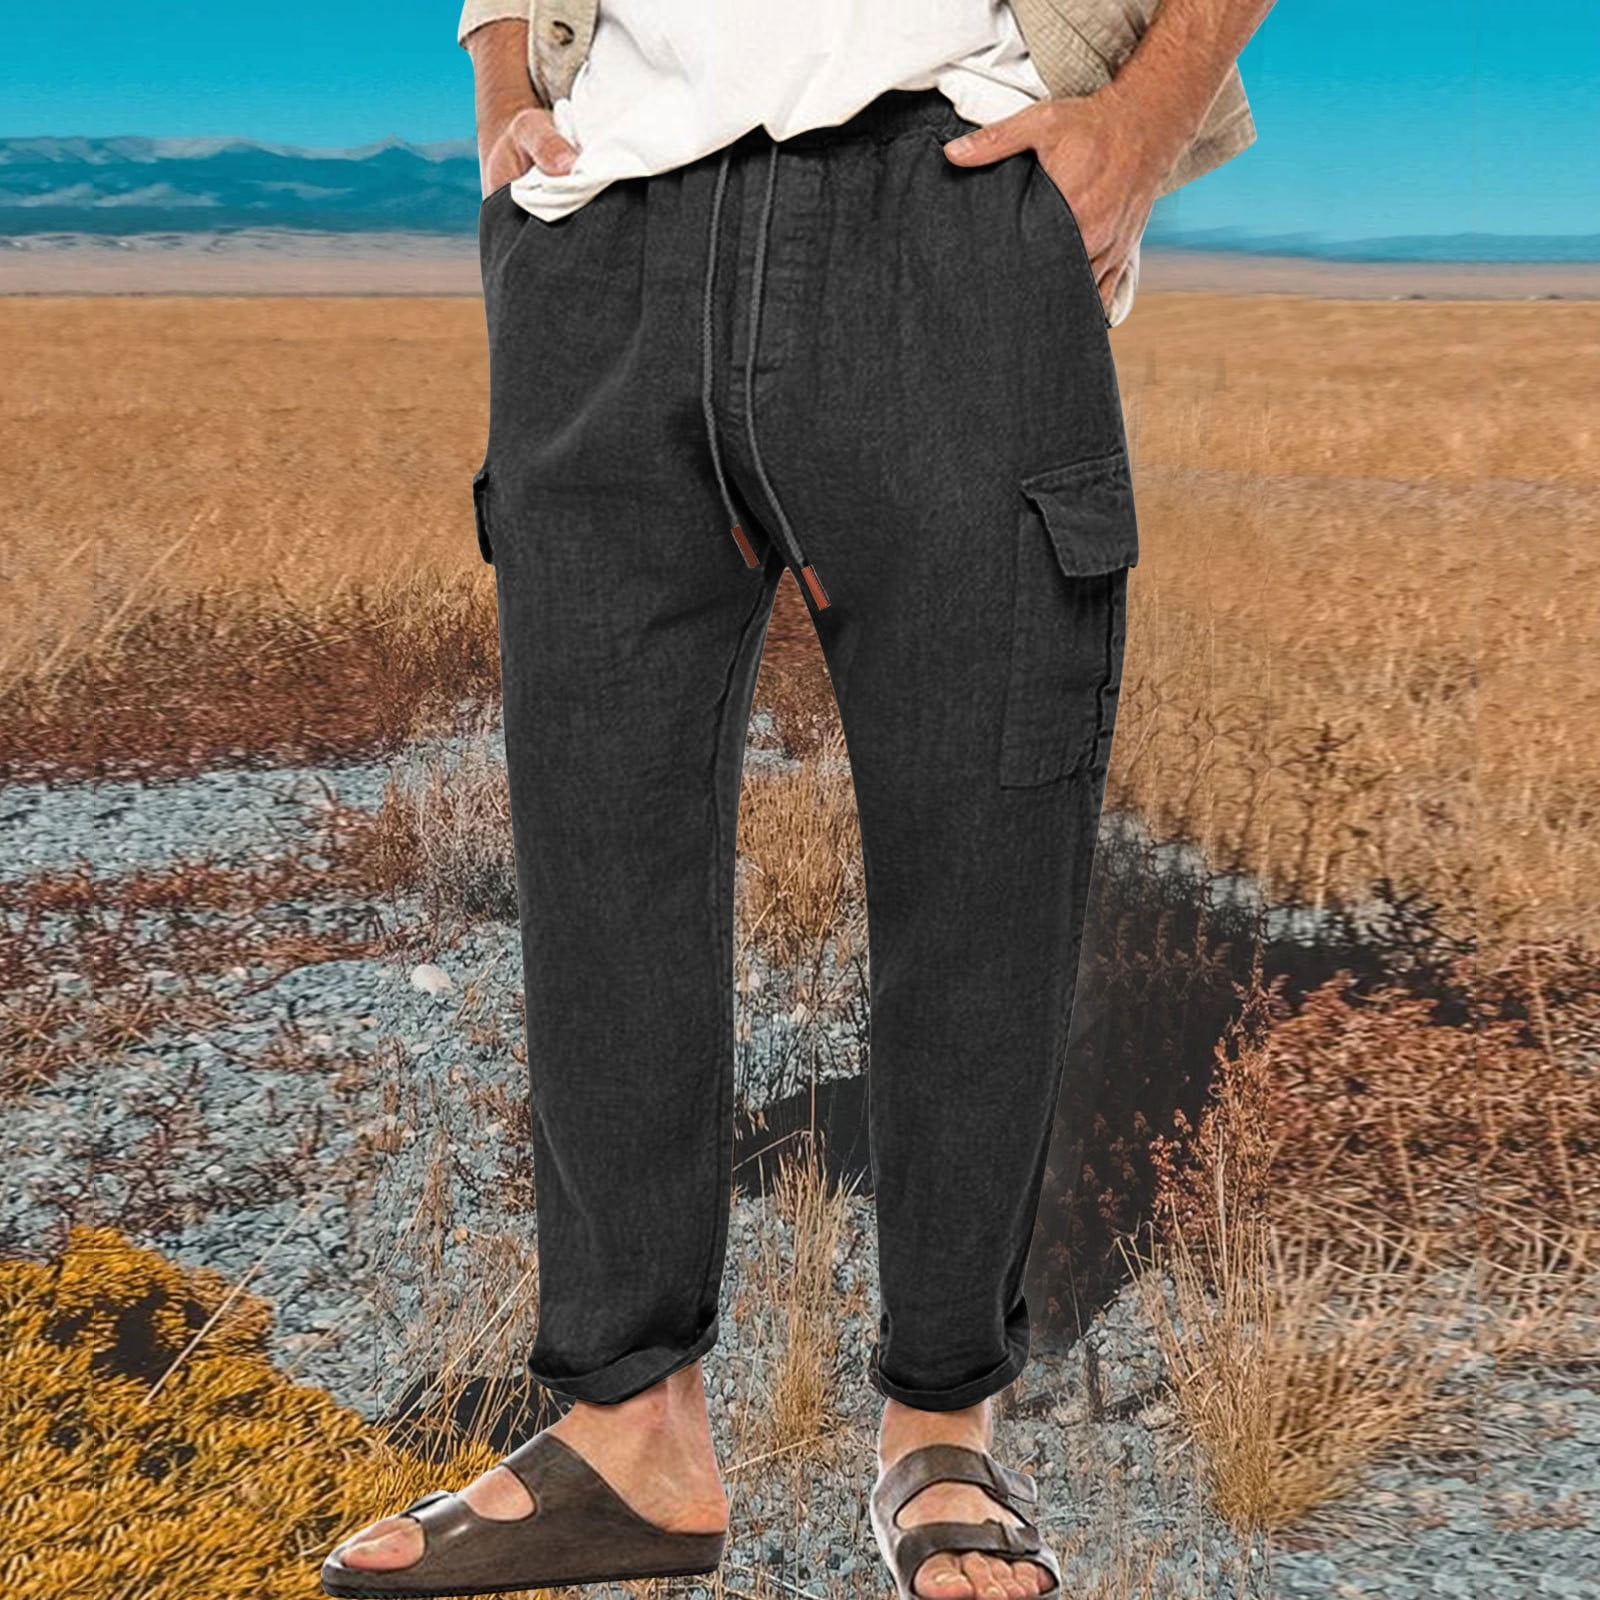 Buy Ficerd 2 Pcs Men's Drawstring Linen Pants Men Casual Beach Trousers  with Pocket Lightweight Elastic Yoga Pant, Black, White, Black, White, XL  at Amazon.in